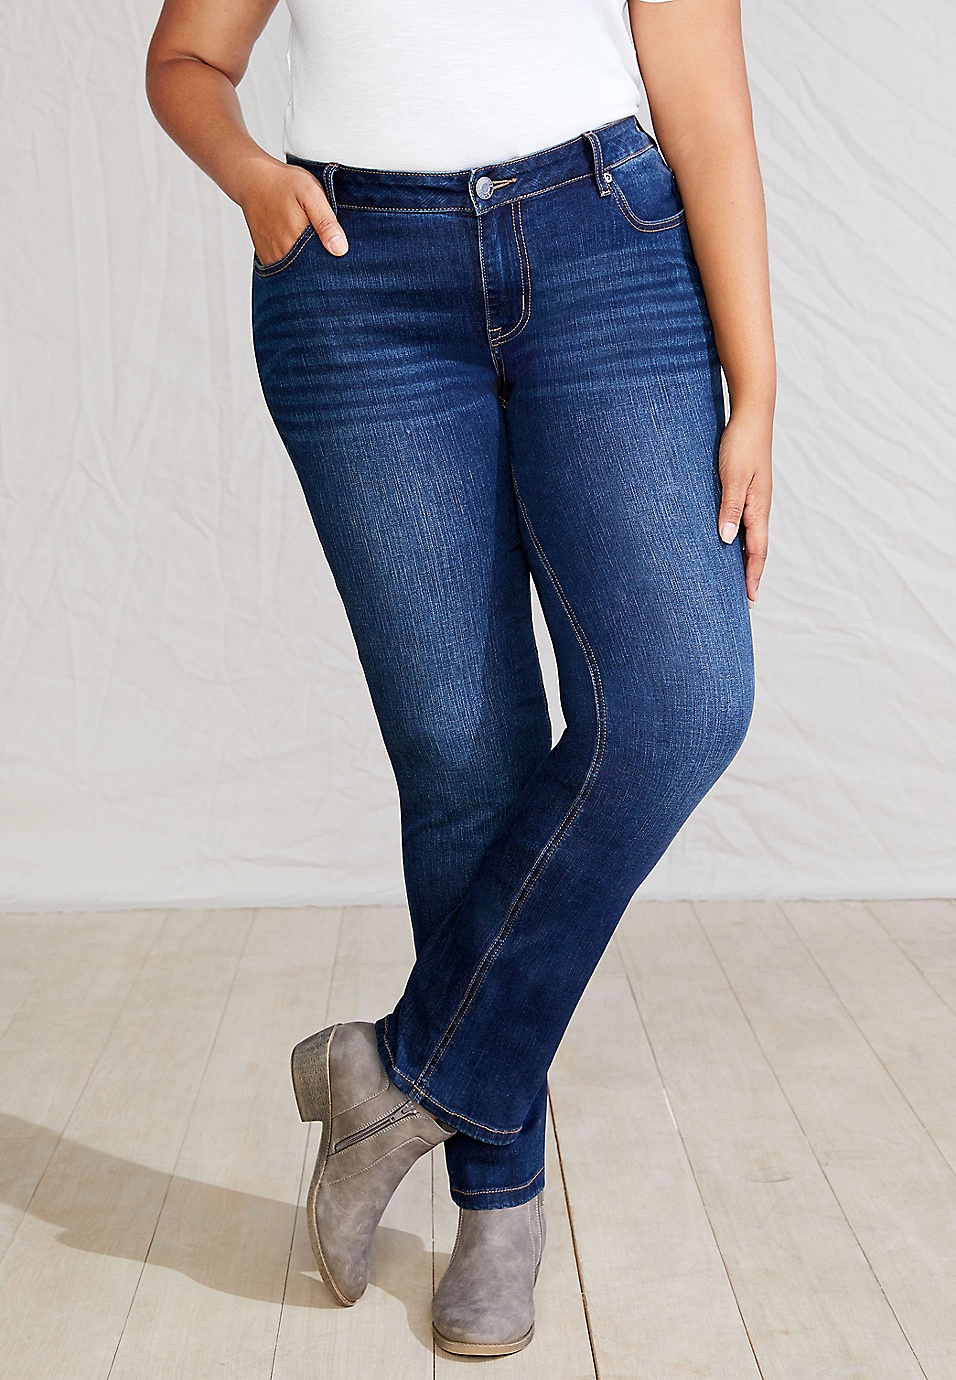 Classic Bootcut Women's Jeans (plus Size) - Medium Wash